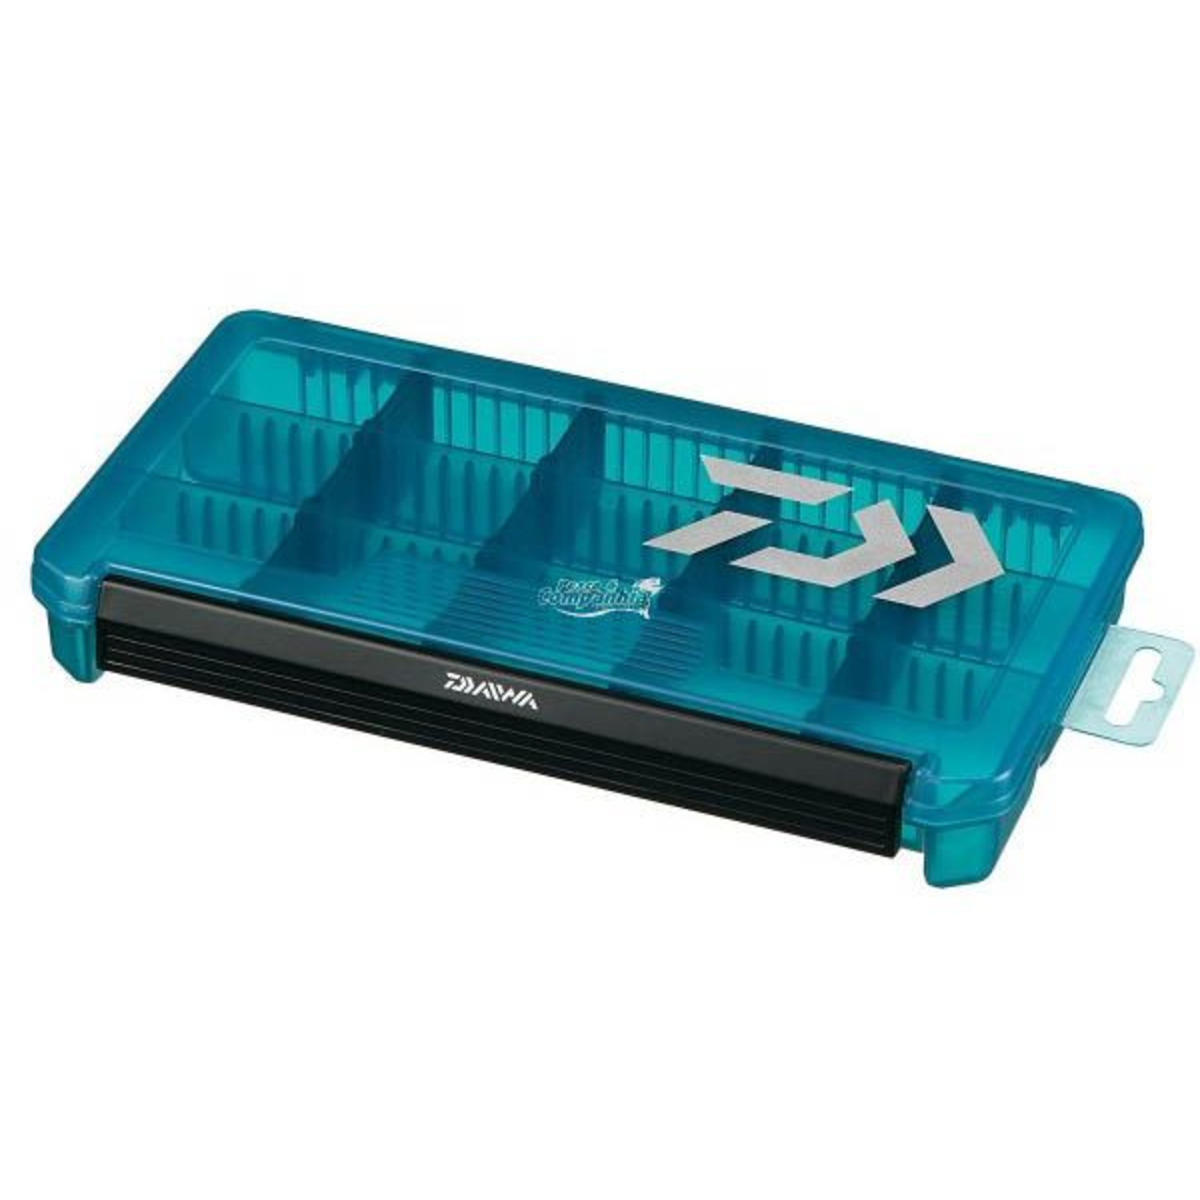 Daiwa Store Boxe -  Azure - 15 Adjustable Compartments       